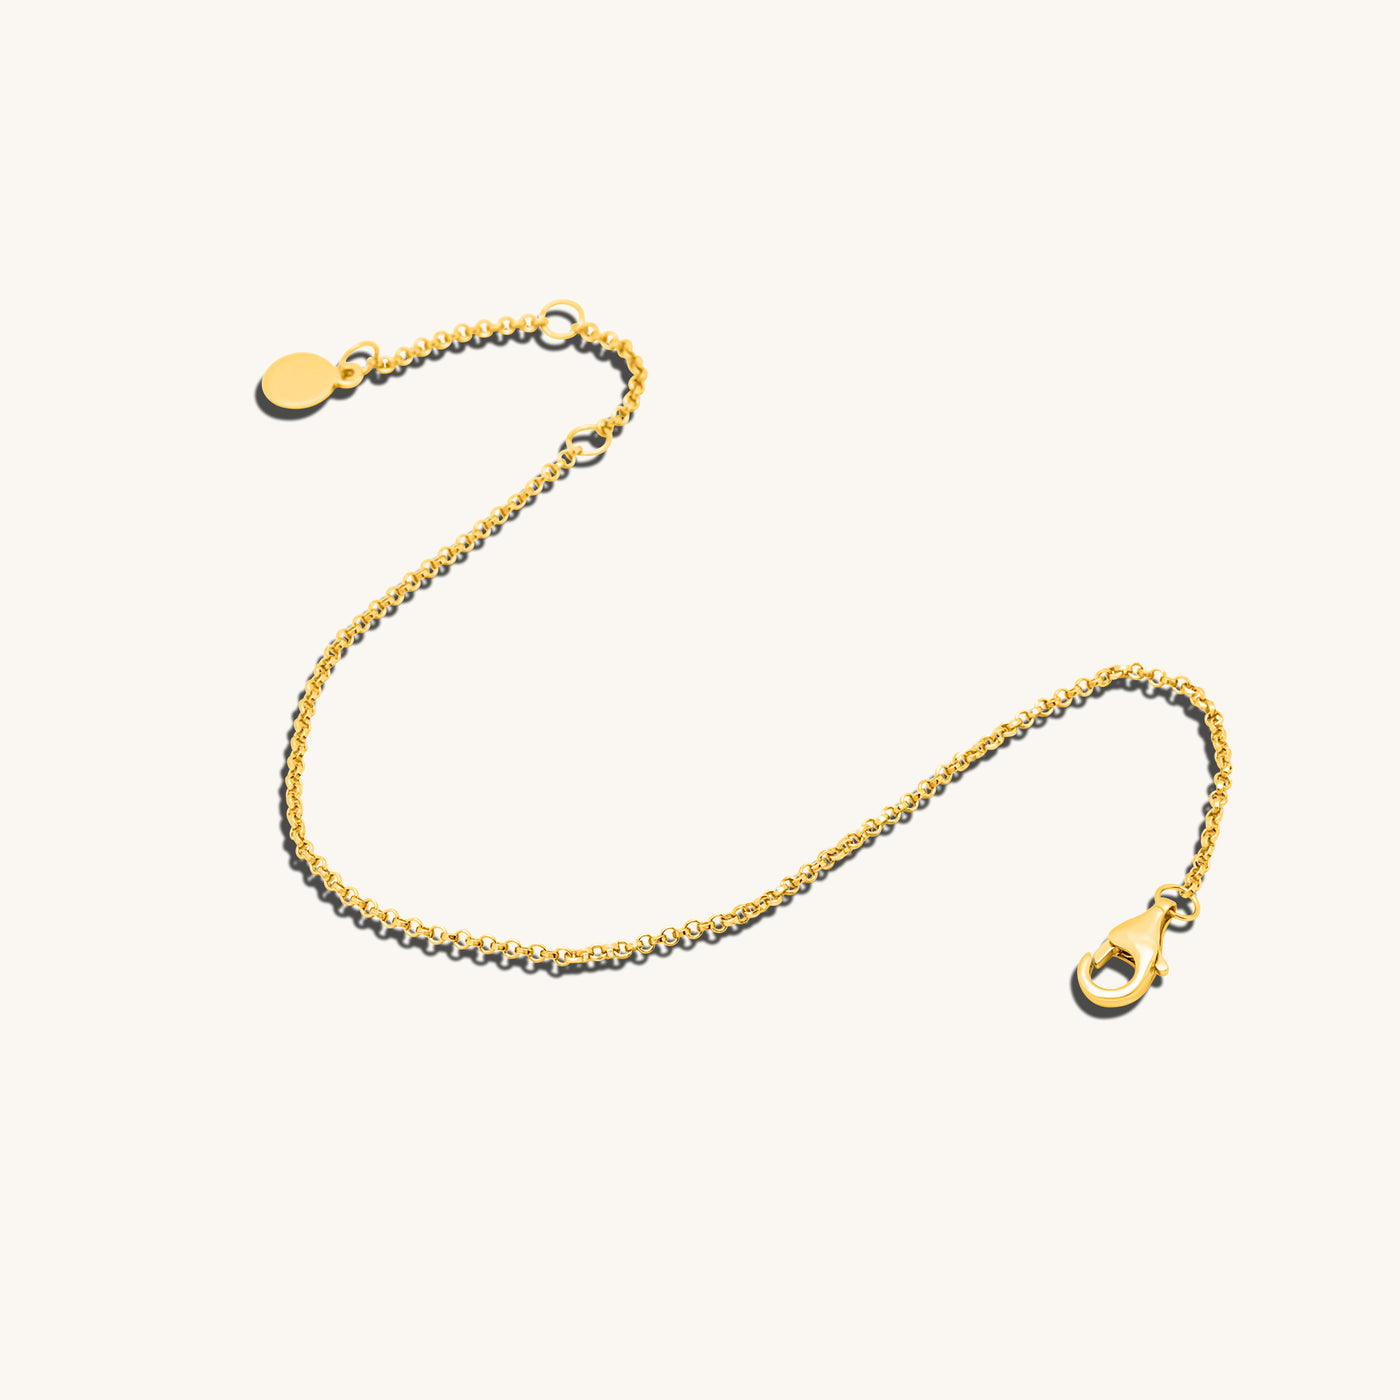 Modern Simple Minimalist Jewelry Women's Bracelet Thin Slick Rolo Chain 1mm 18k Gold Layered on 925 Sterling Silver 